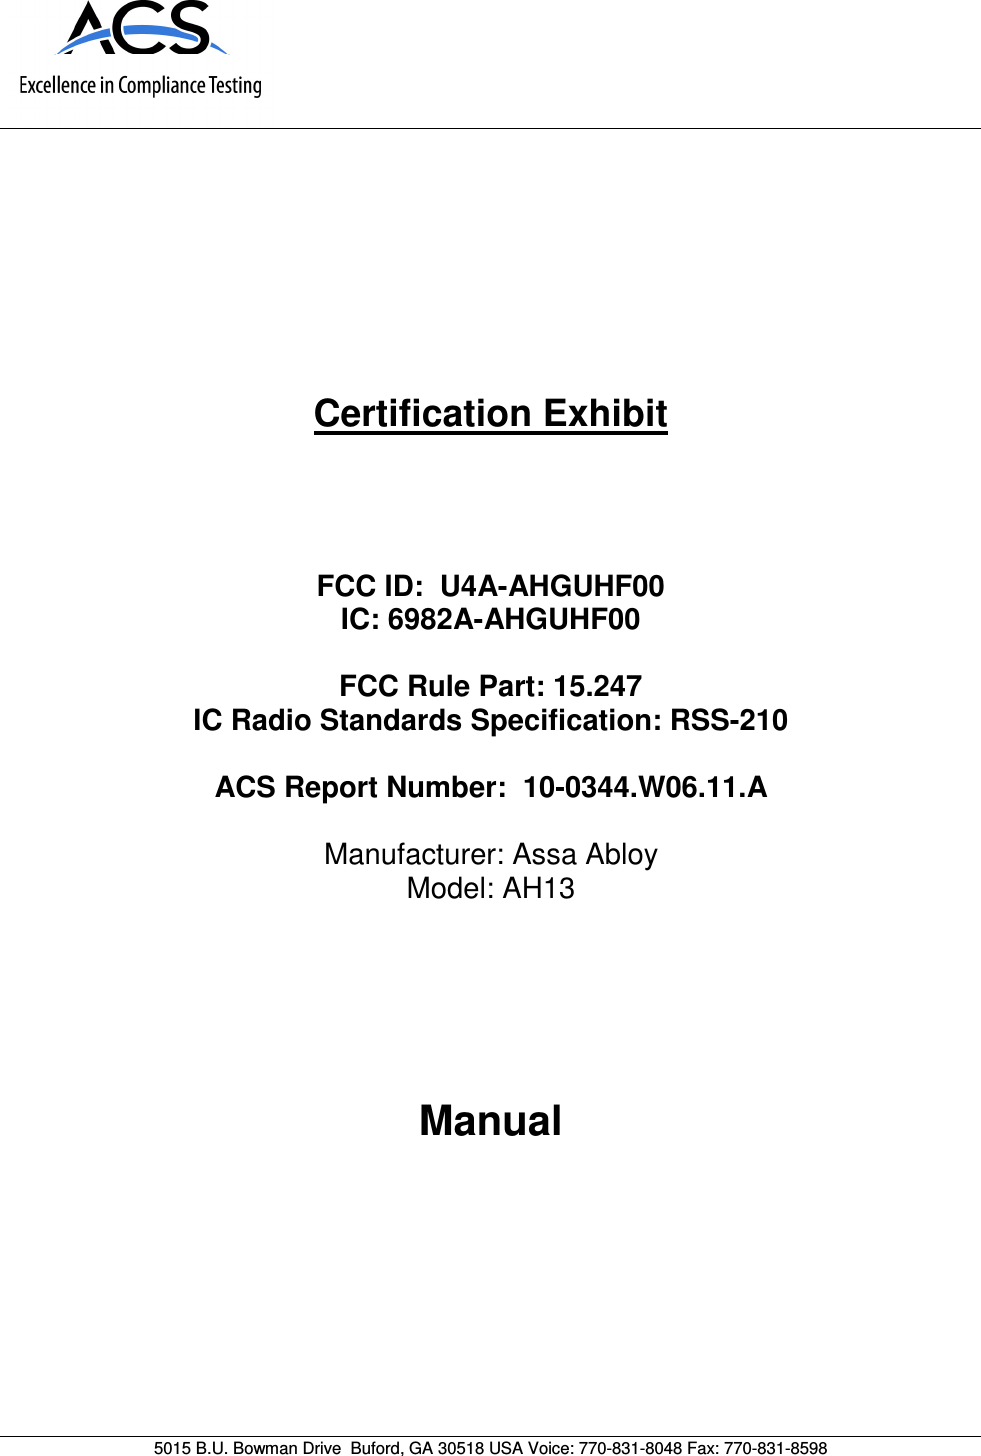      5015 B.U. Bowman Drive  Buford, GA 30518 USA Voice: 770-831-8048 Fax: 770-831-8598   Certification Exhibit     FCC ID:  U4A-AHGUHF00 IC: 6982A-AHGUHF00  FCC Rule Part: 15.247 IC Radio Standards Specification: RSS-210  ACS Report Number:  10-0344.W06.11.A   Manufacturer: Assa Abloy Model: AH13     Manual  